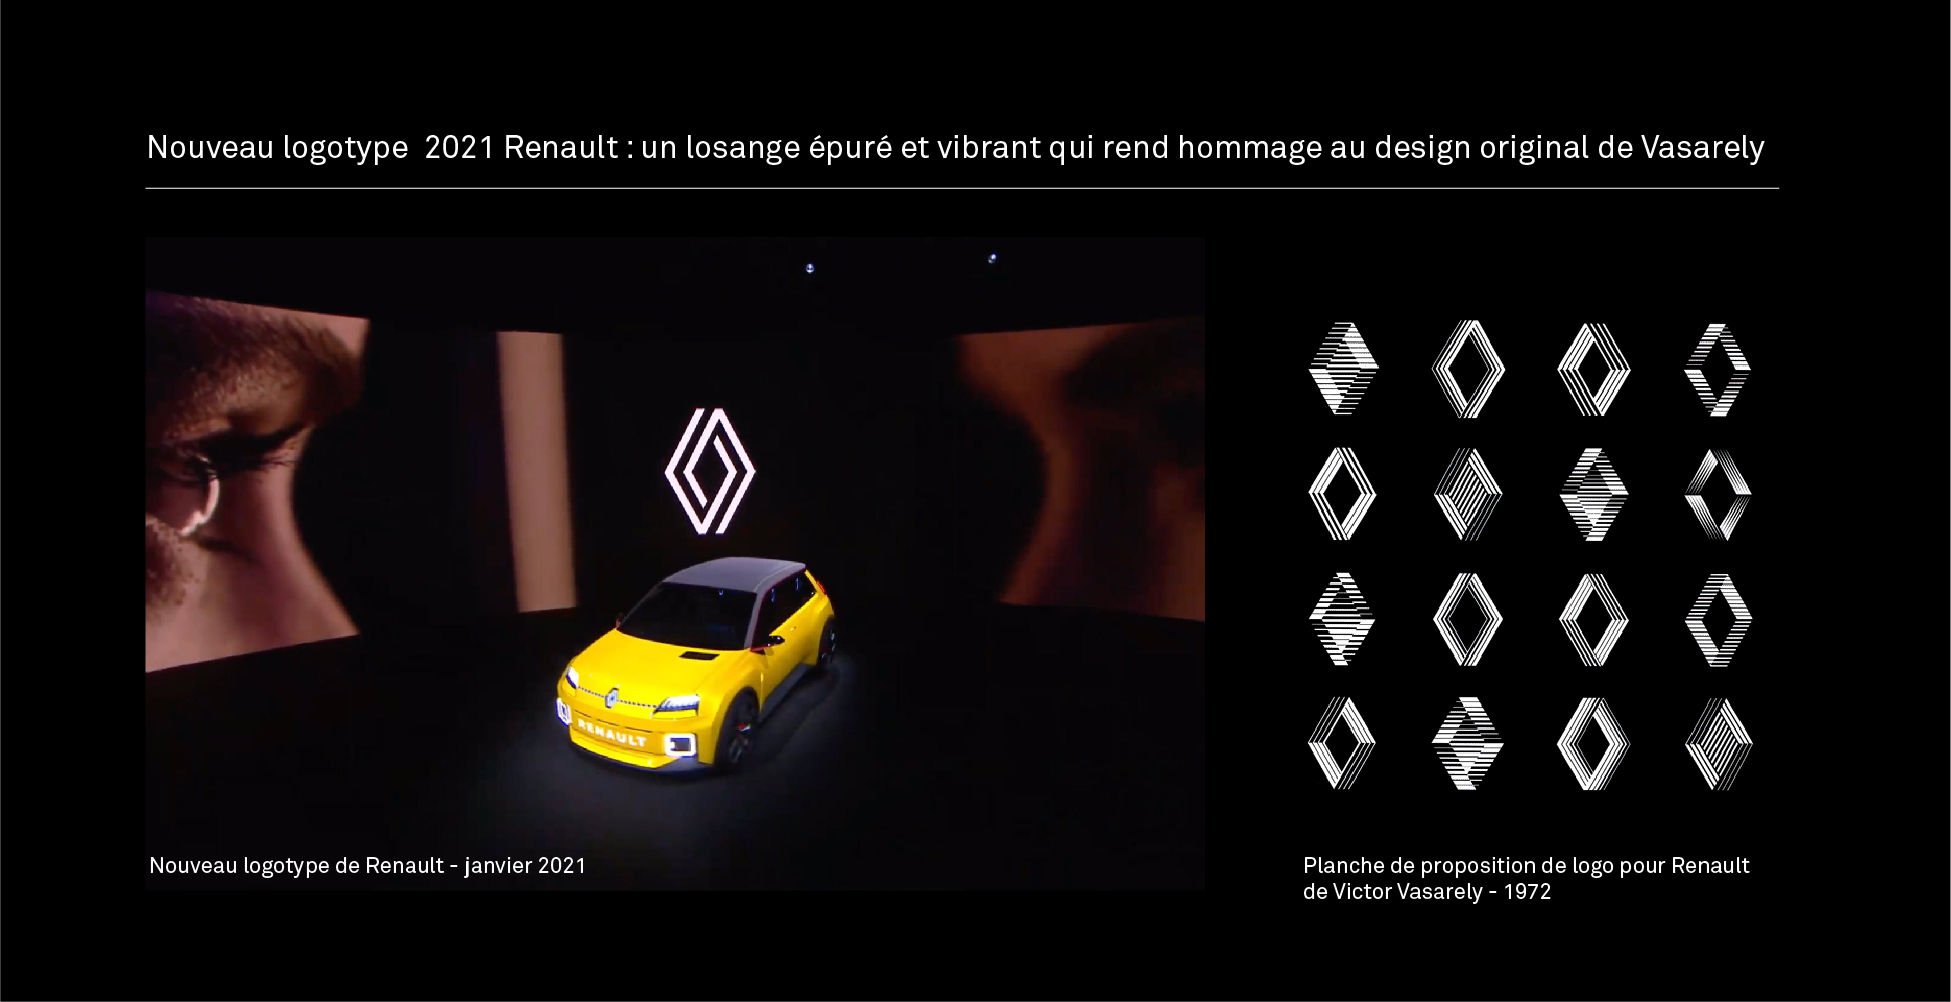 Peugeot Introduces New Brand Logo That Symbolizes Upmarket Move